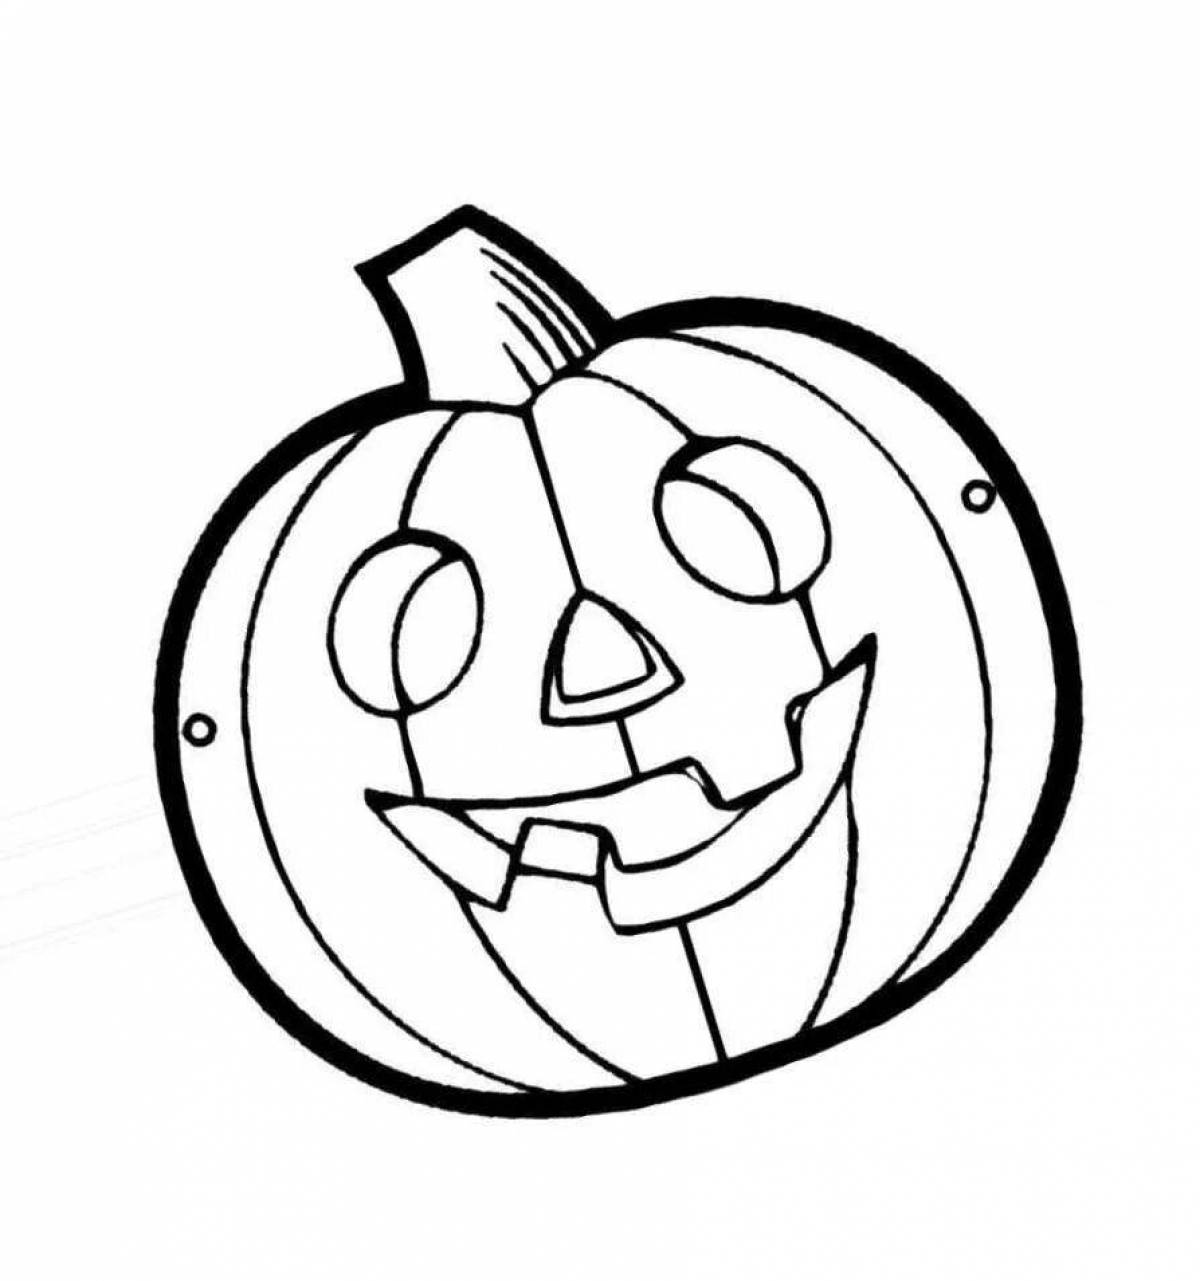 Menacing halloween pumpkin coloring page